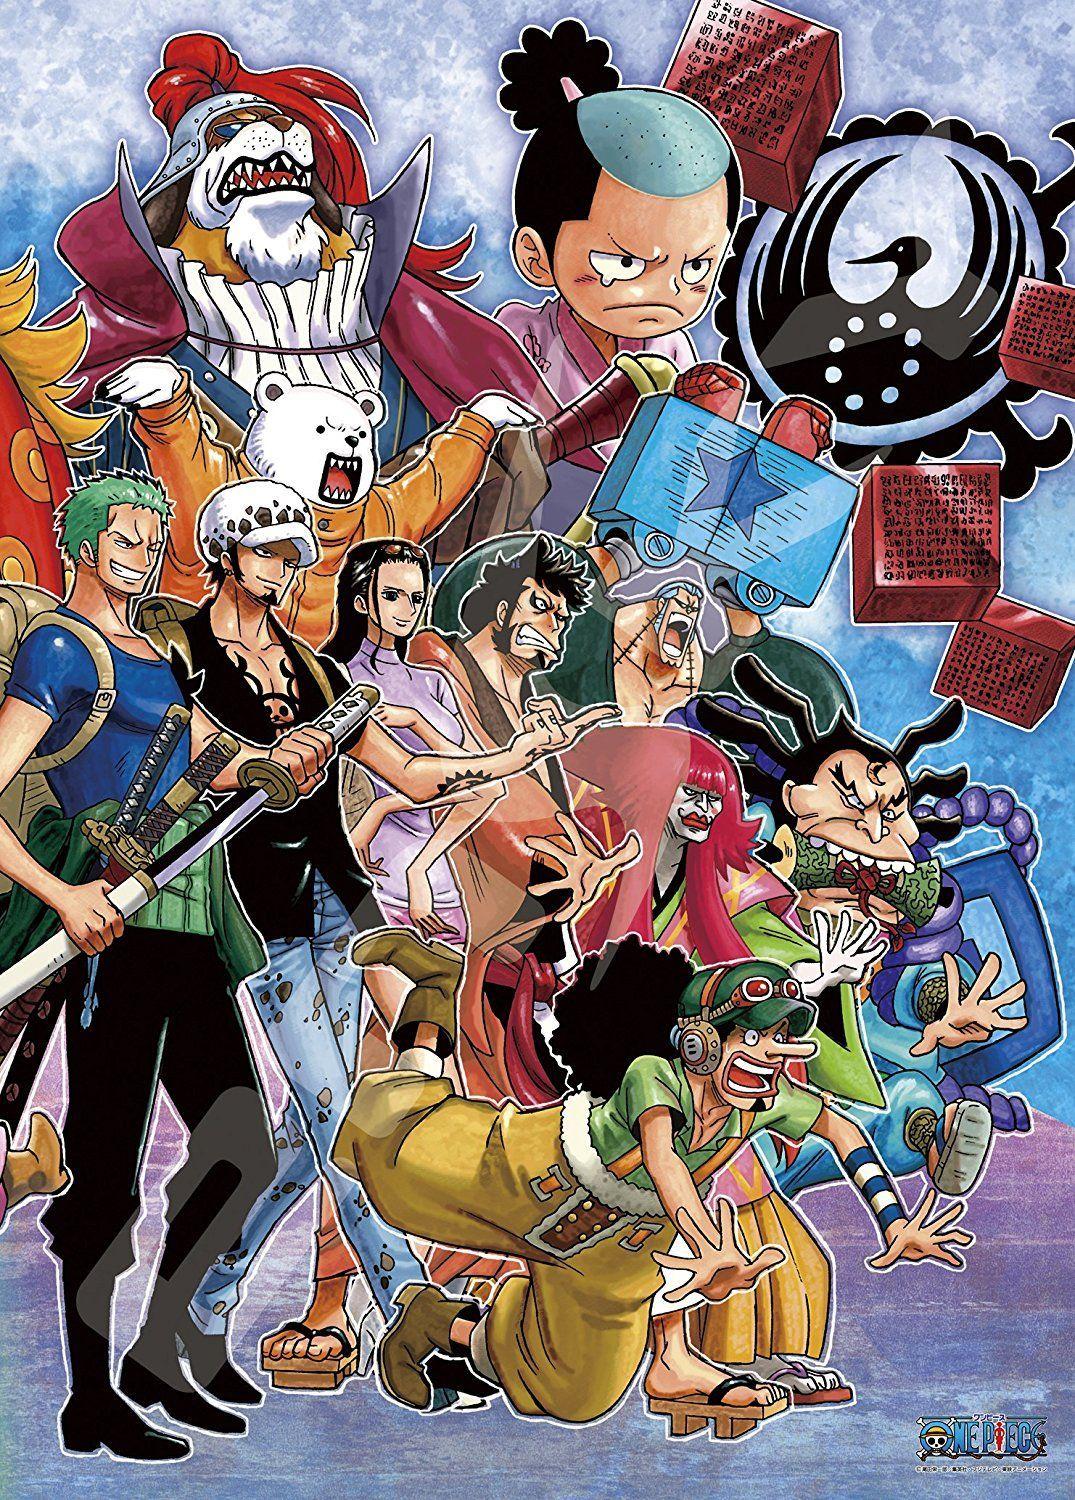 1075x1500 Phi hành đoàn Wano.  One Piece tumblr, One Piece manga, One Piece